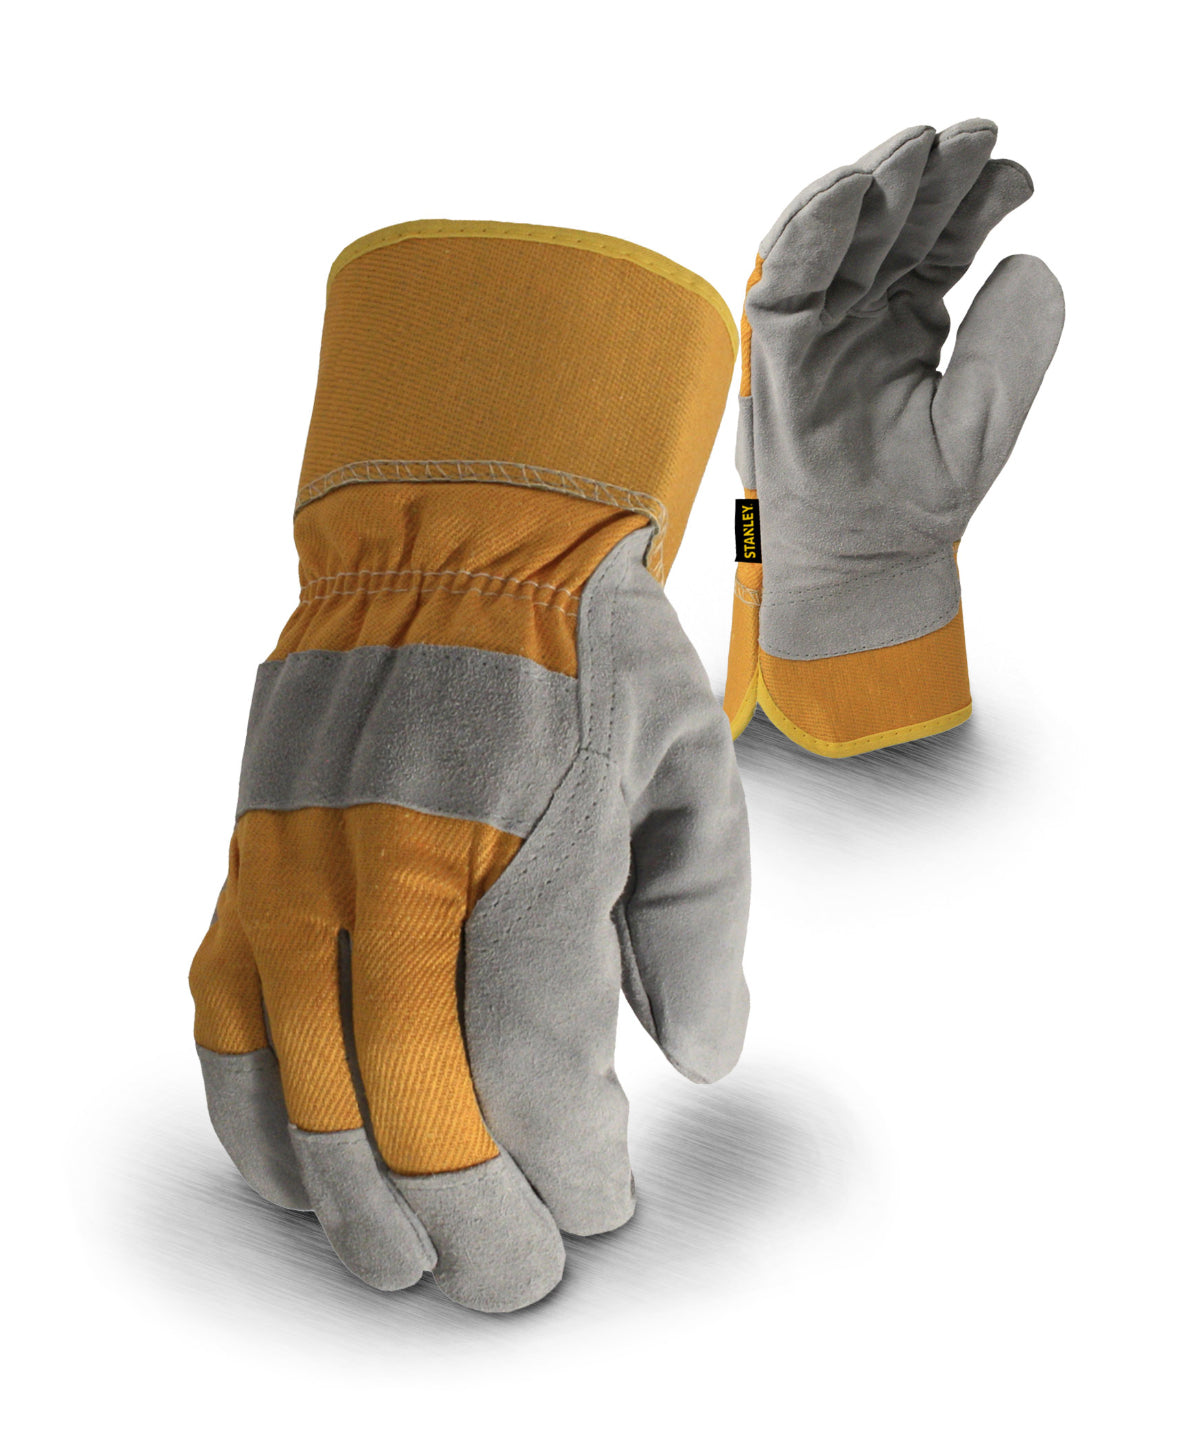 Stanley winter rigger gloves